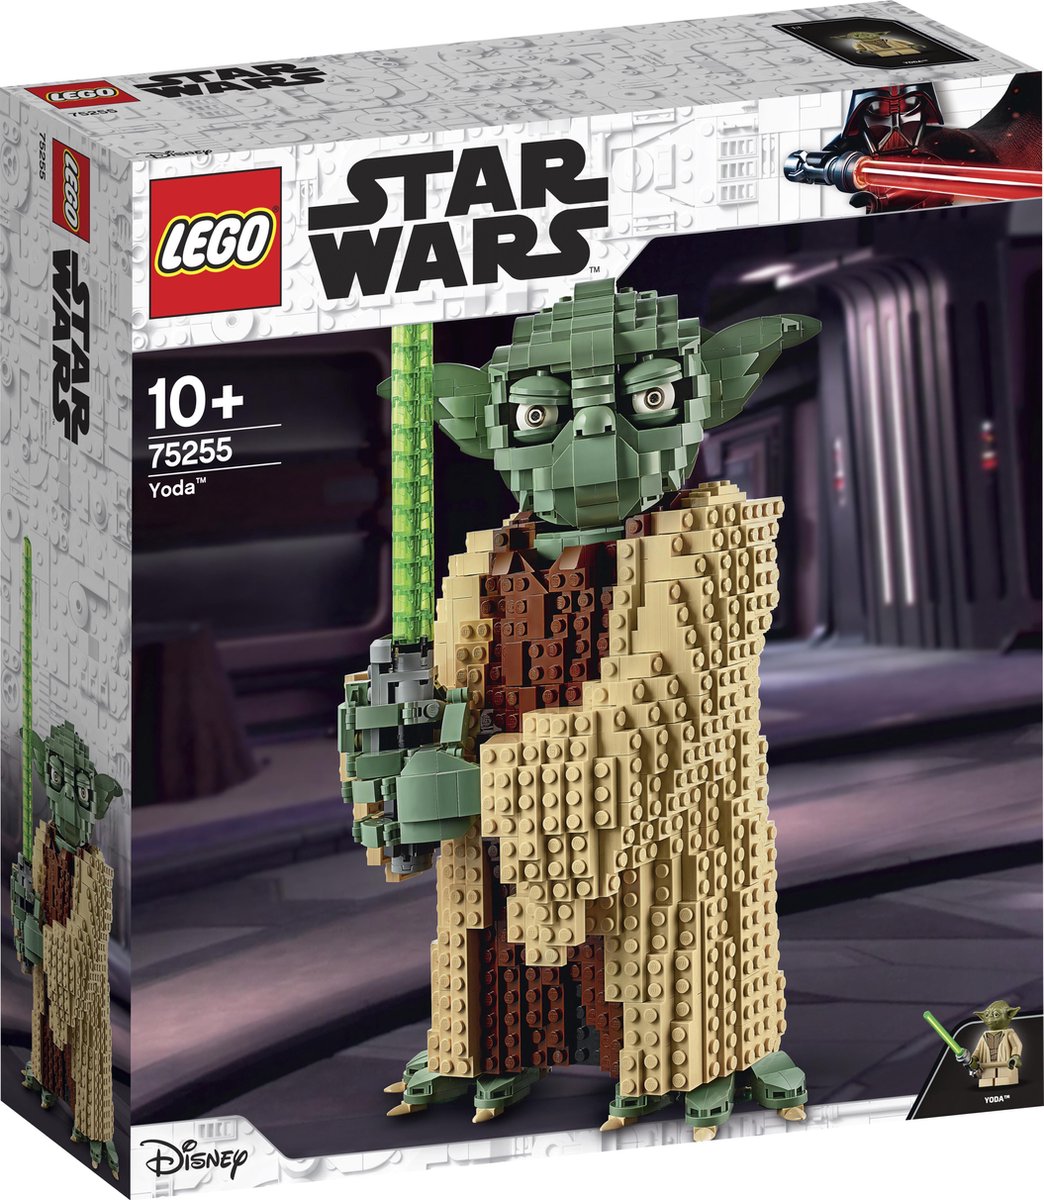 LEGO Star Wars Yoda